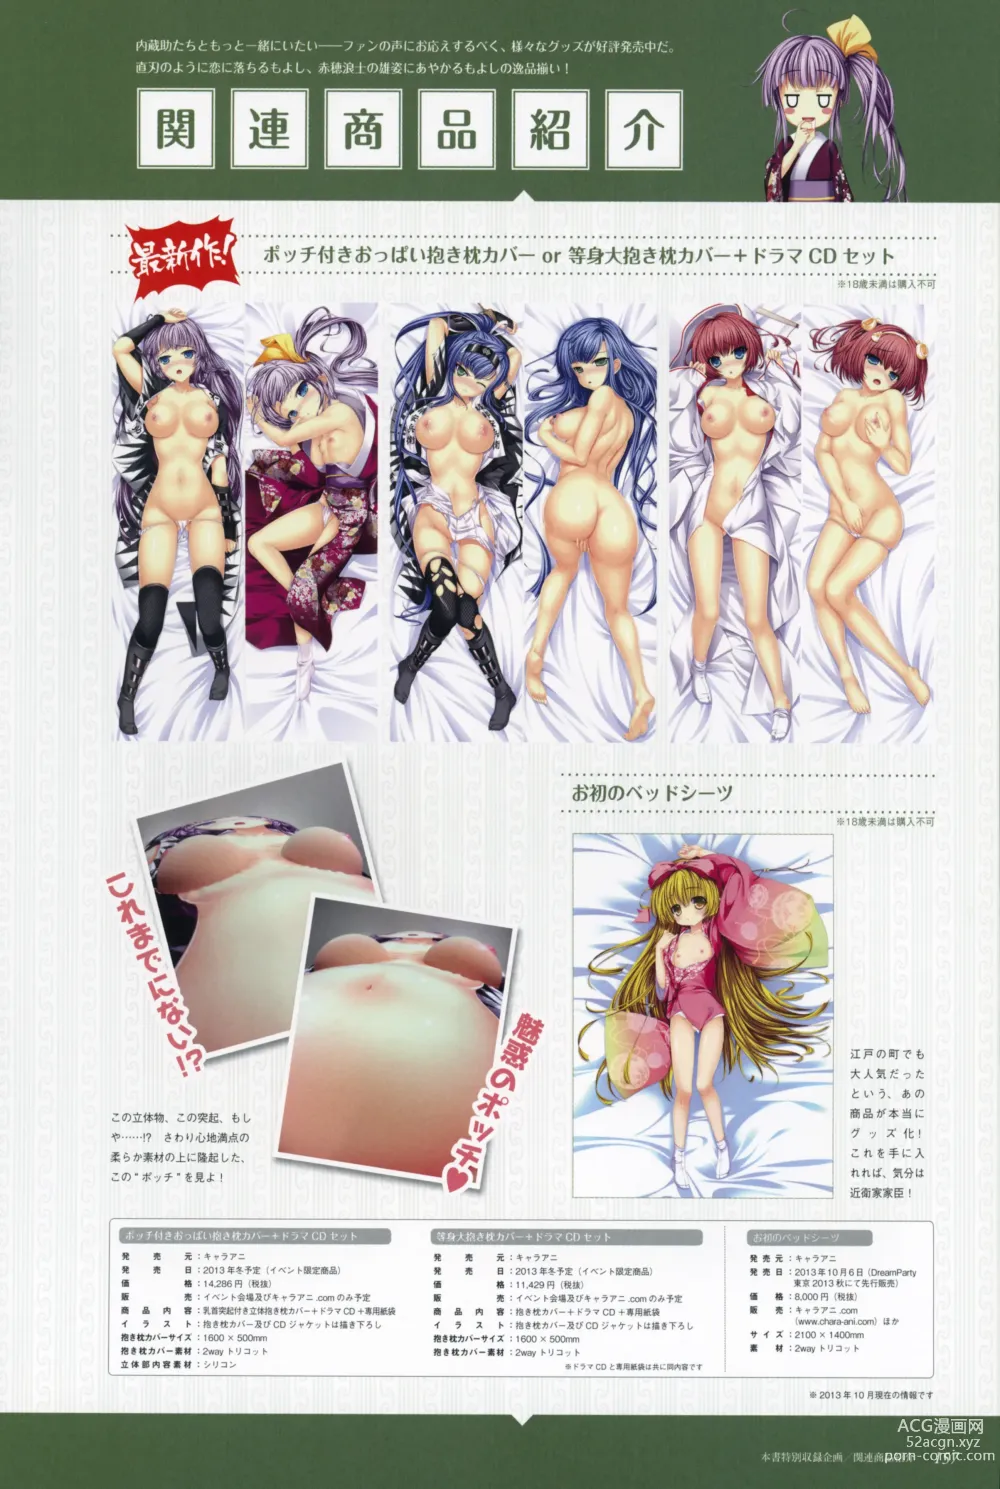 Page 159 of manga ChuSinGura 46+1 Official Visual Fan Book